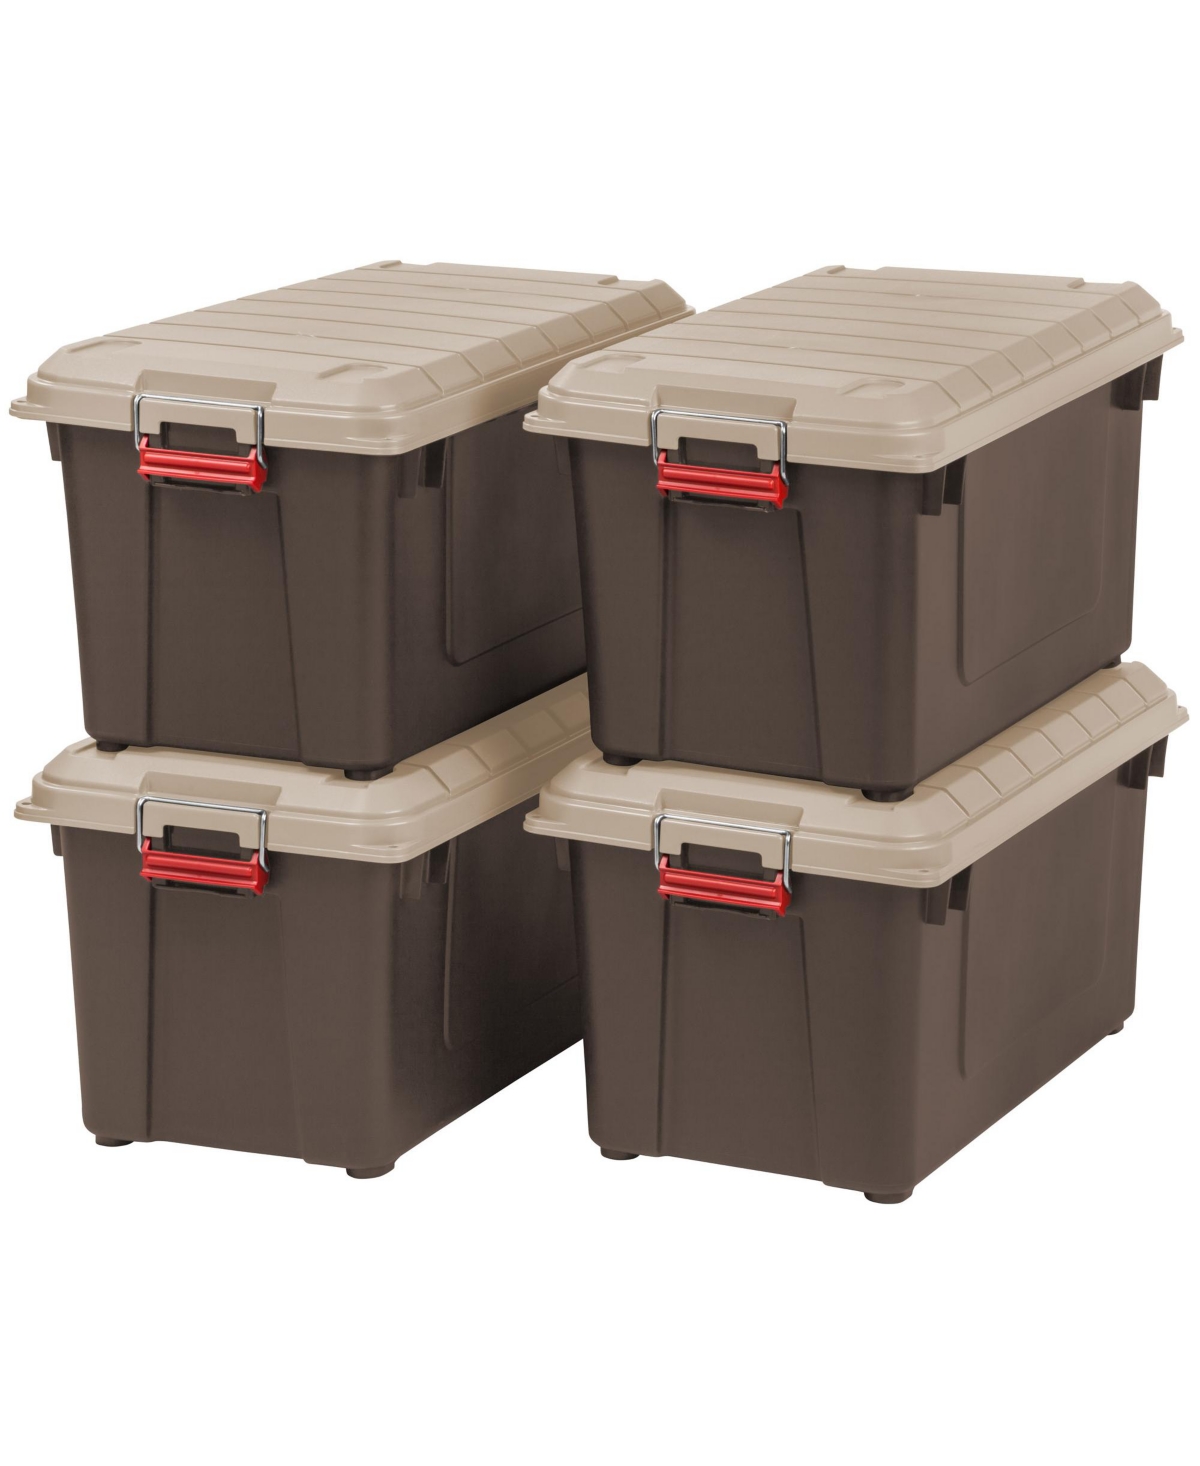 82 Quart WeatherPro Storage Box, Store-It-All Utility Tote, Brown, Set of 4 - Brown